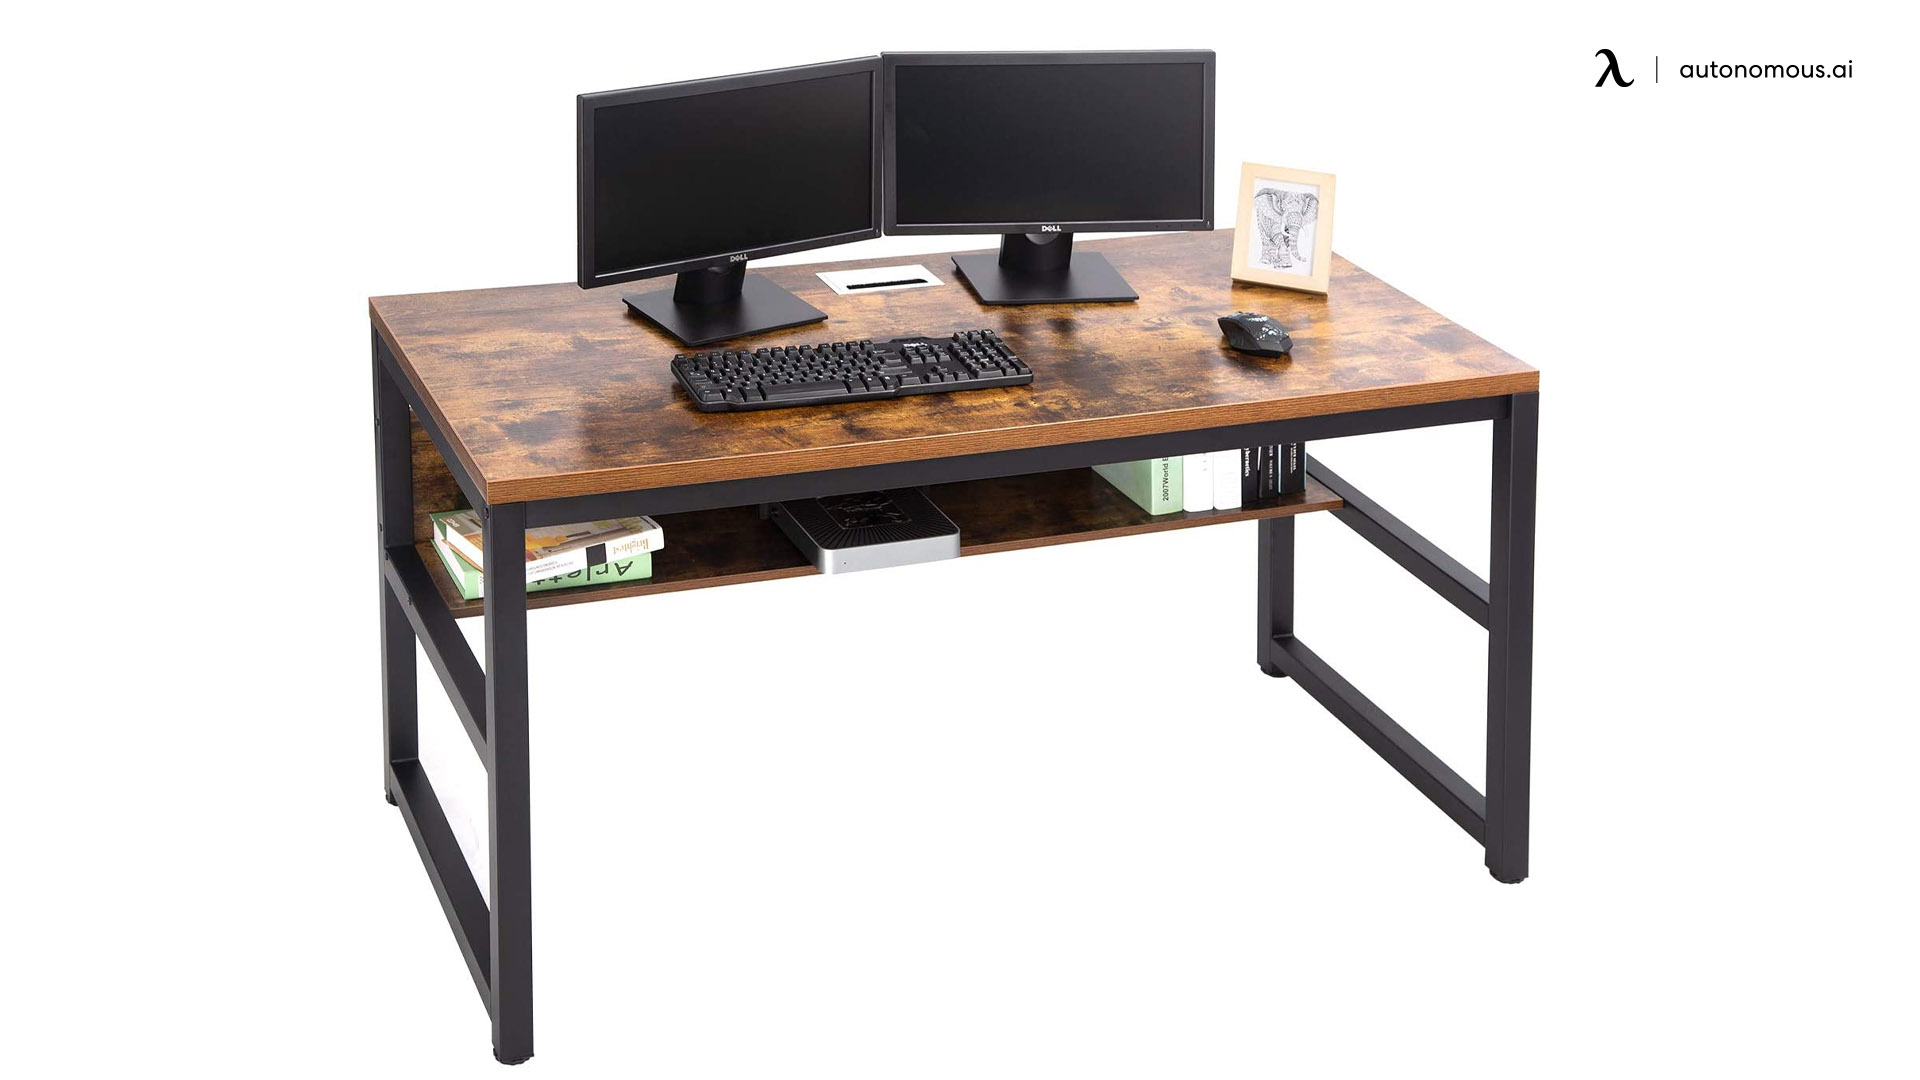 Topsky Computer Desk